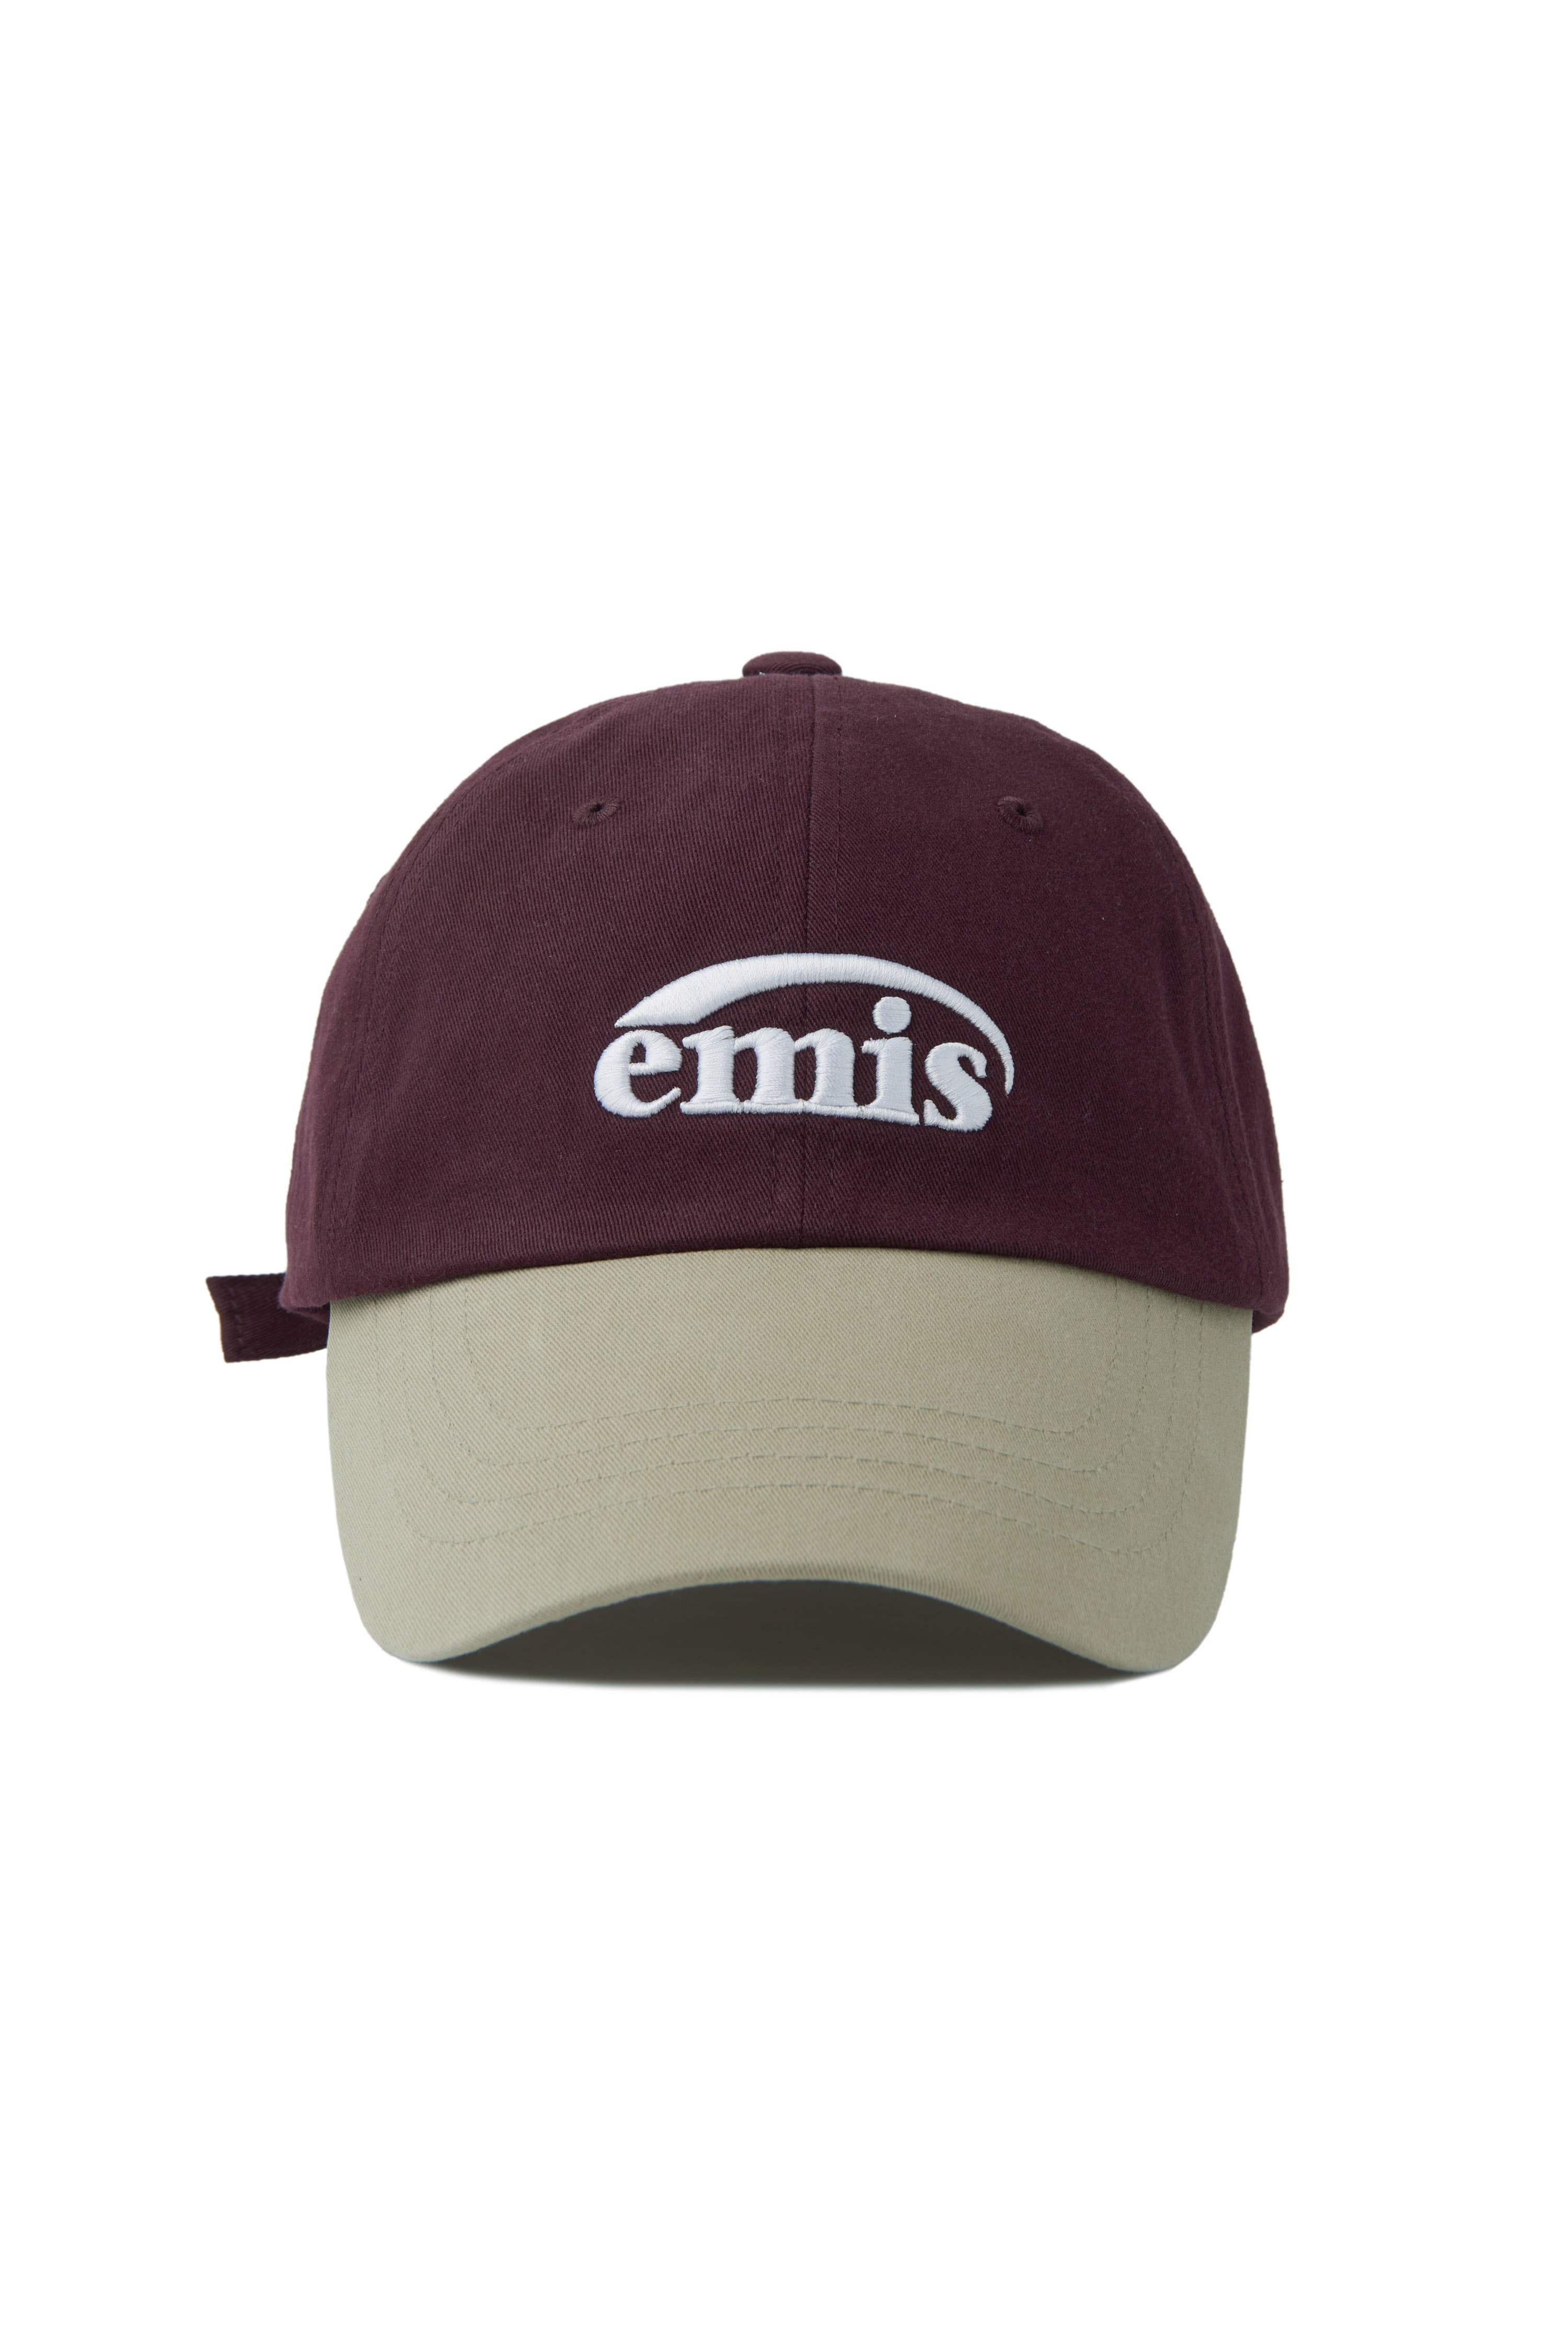 【IN STOCK】EMIS NEW LOGO MIX BALL CAP-BEIGE/WINE